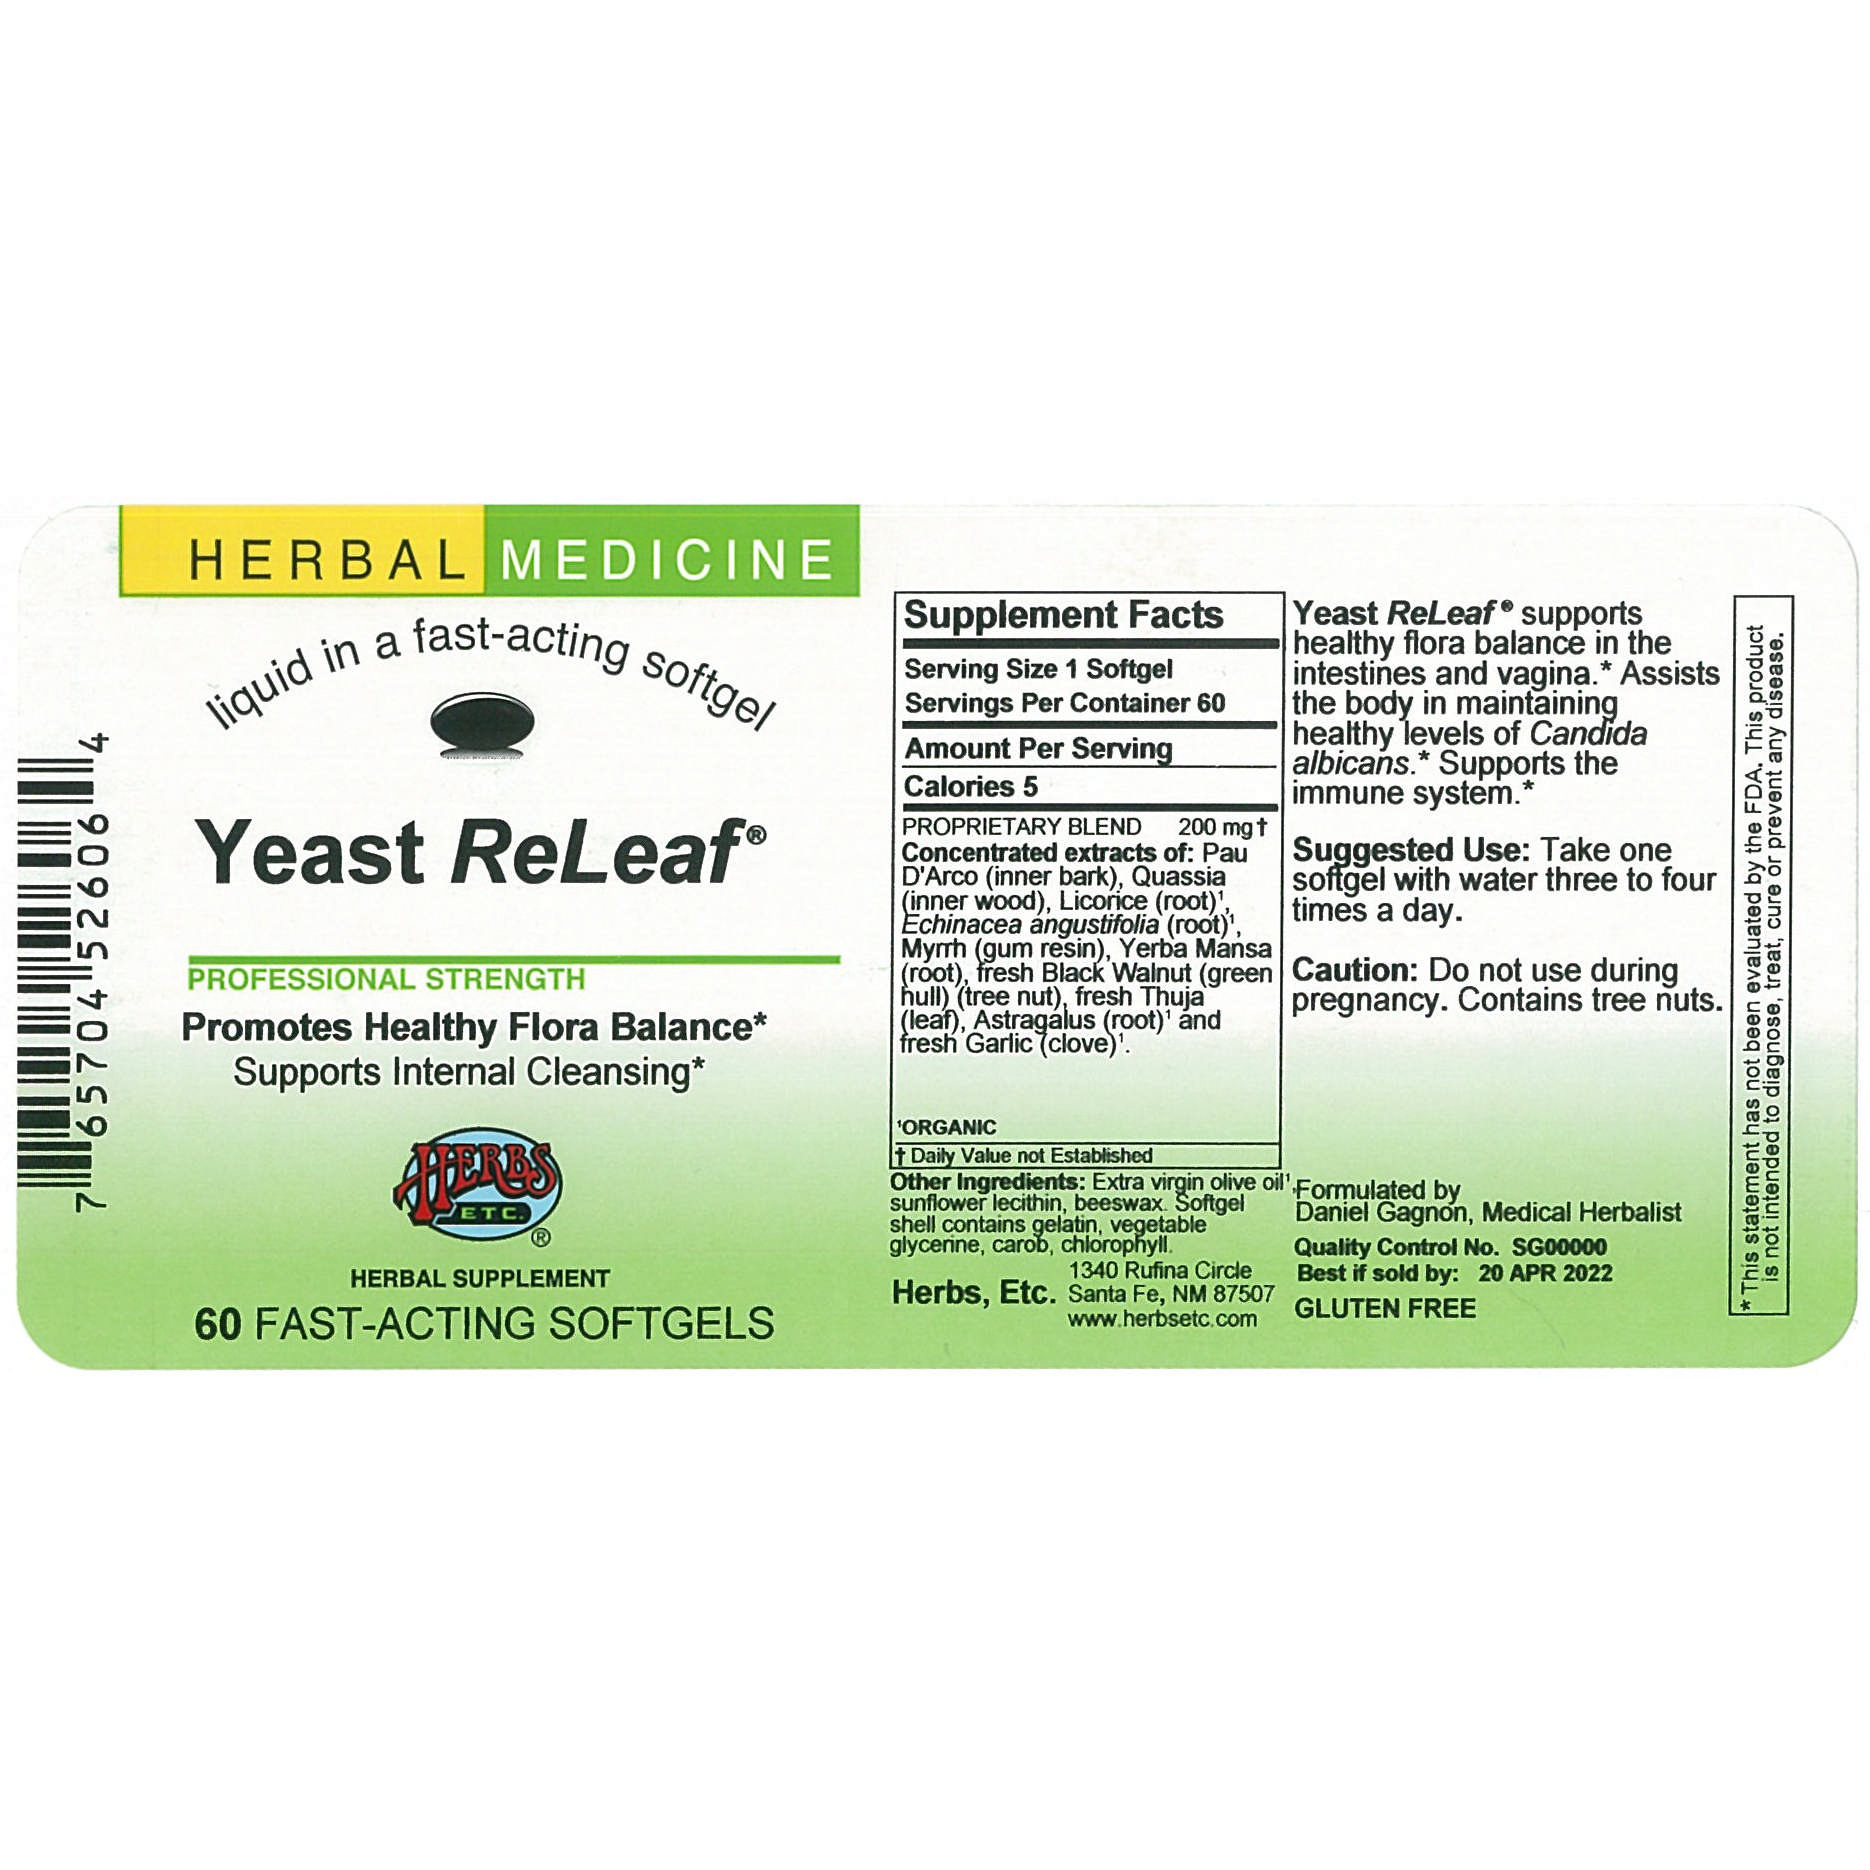 Herbs Etc - Yeast Releaf softgel